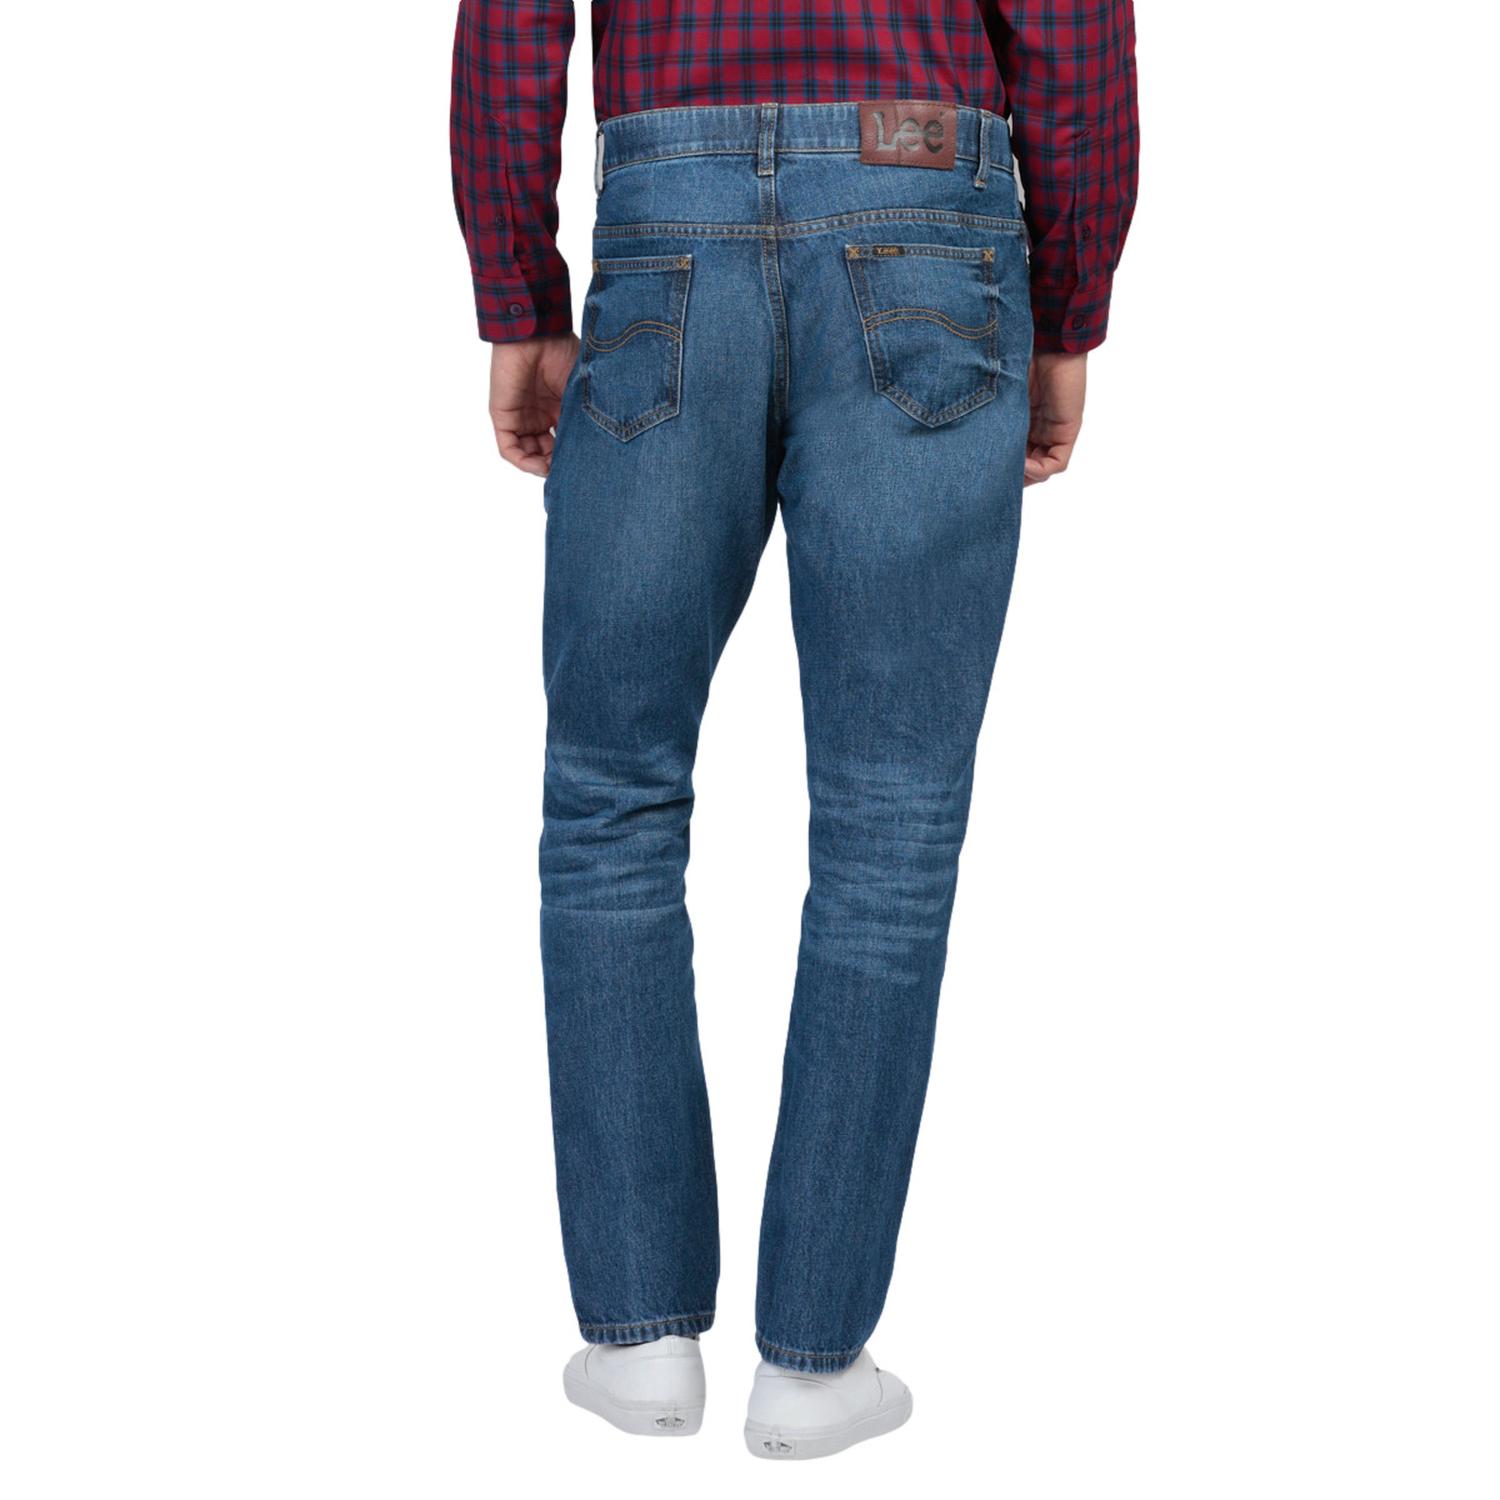 Pantalon Jeans Skinny Shape Up Lee Mujer 251